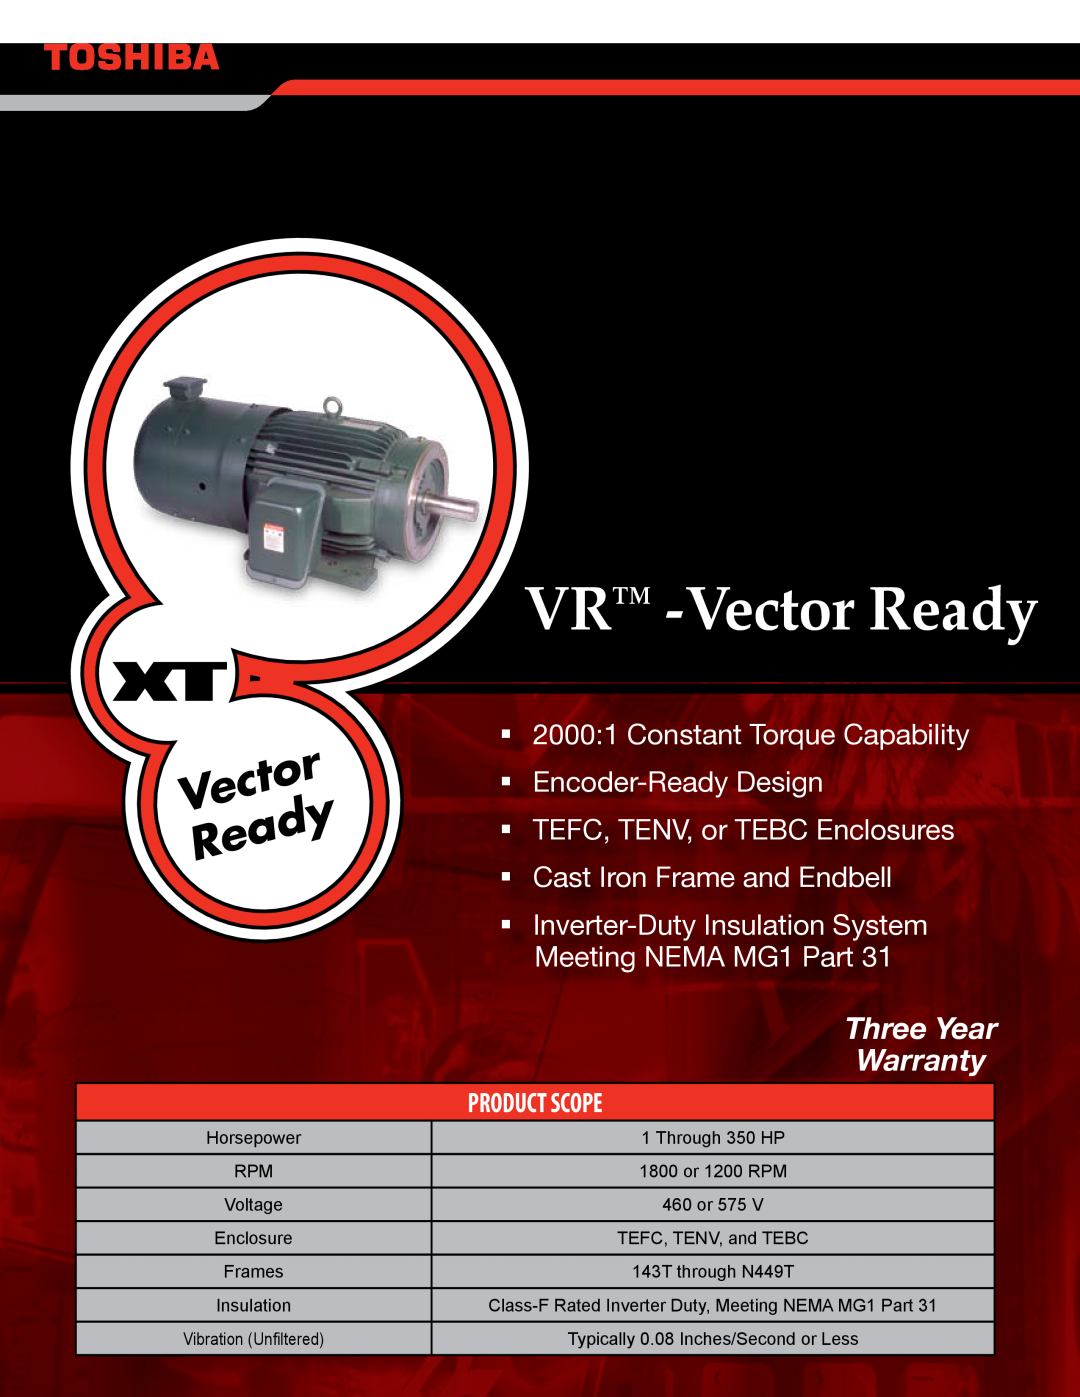 Toshiba VR Series warranty VR -Vector Ready, Low Voltage Motors, Three Year Warranty, Product Scope 